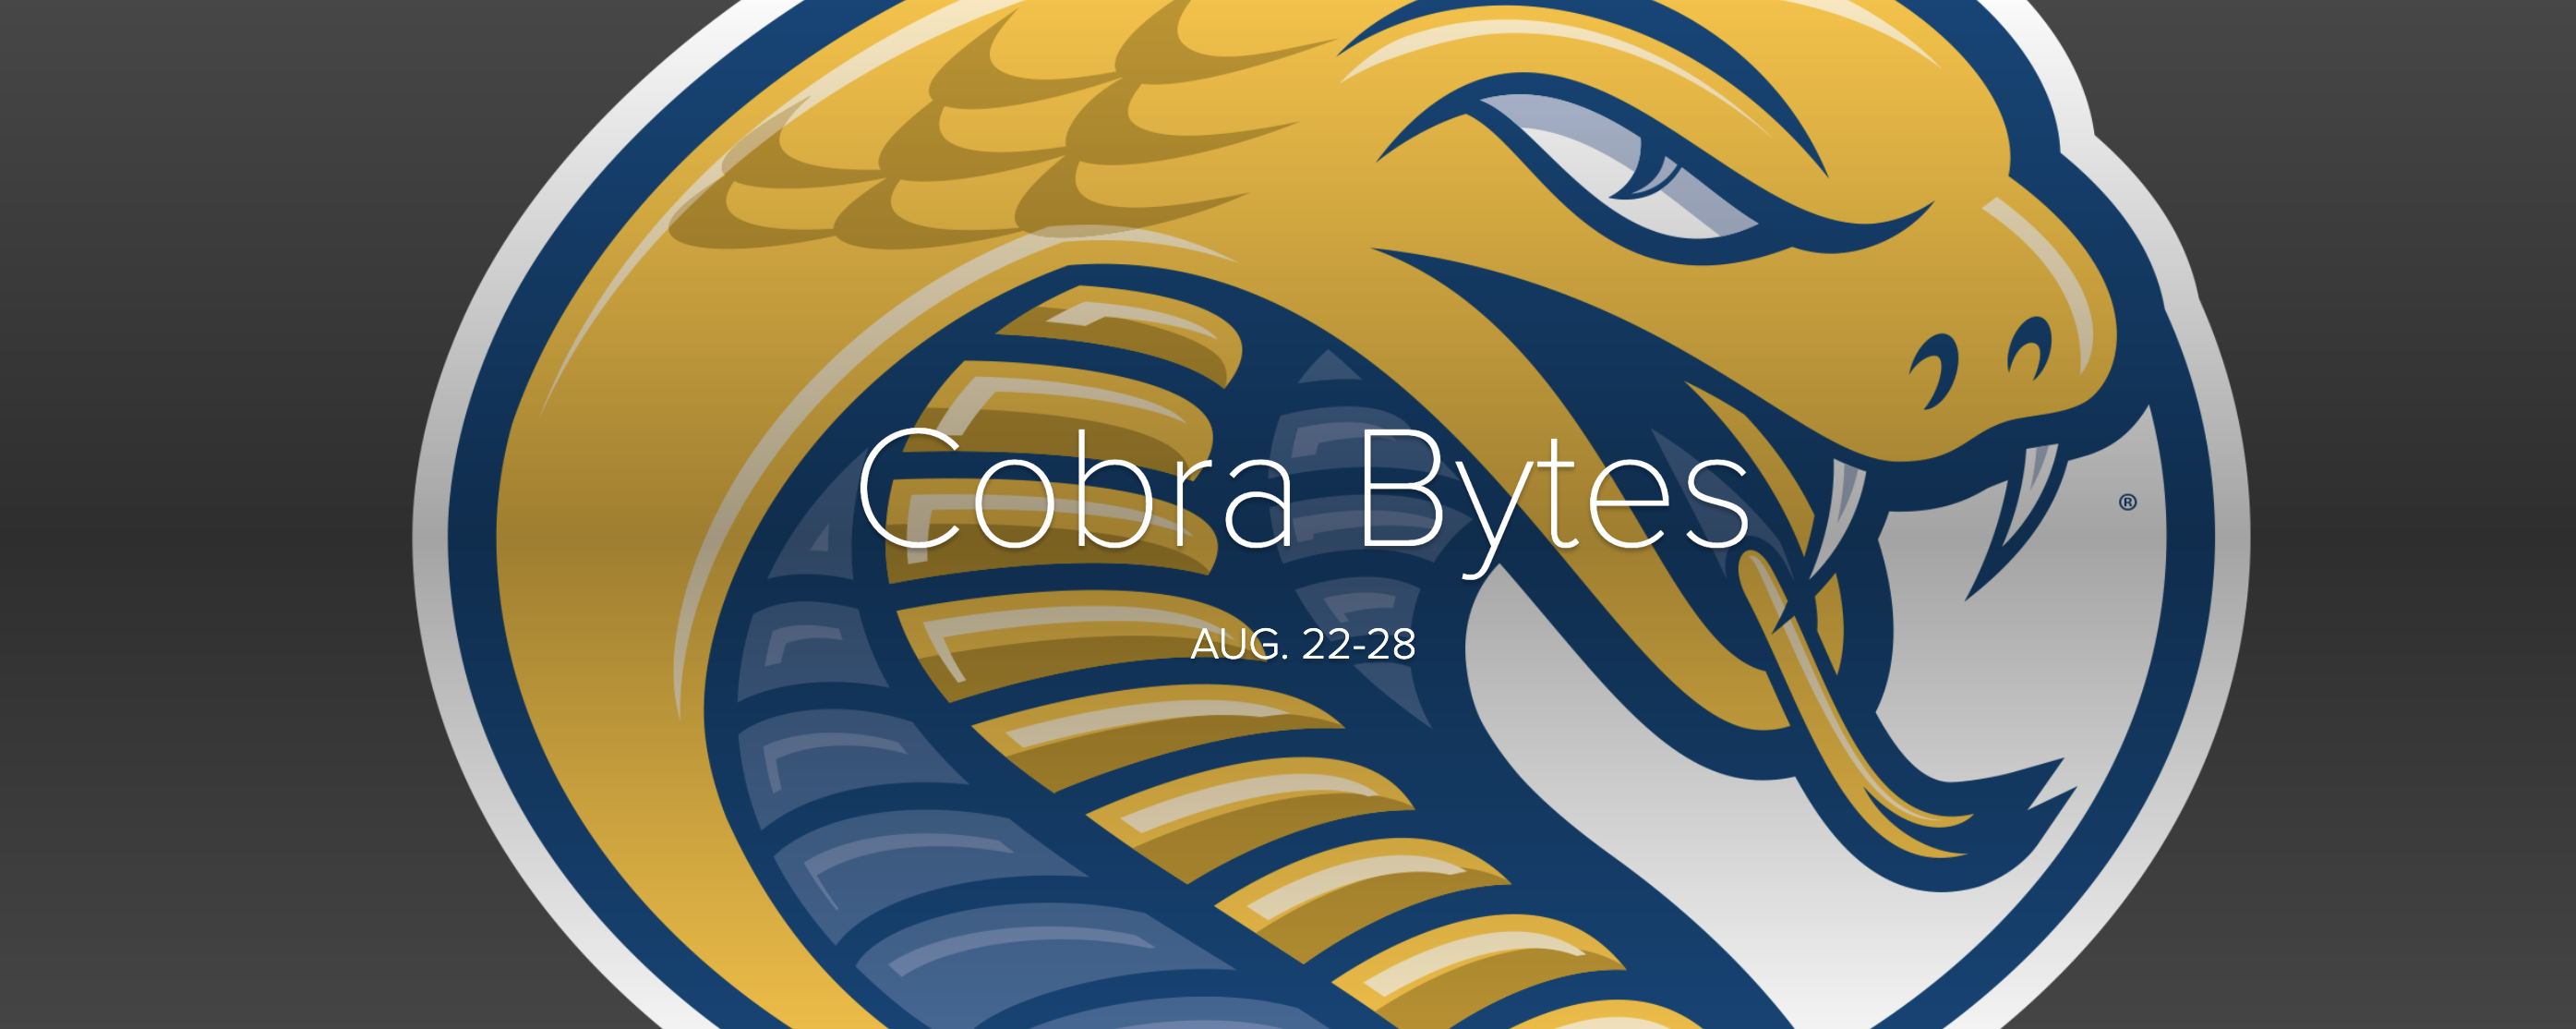 Cobra Bytes Aug. 22-28